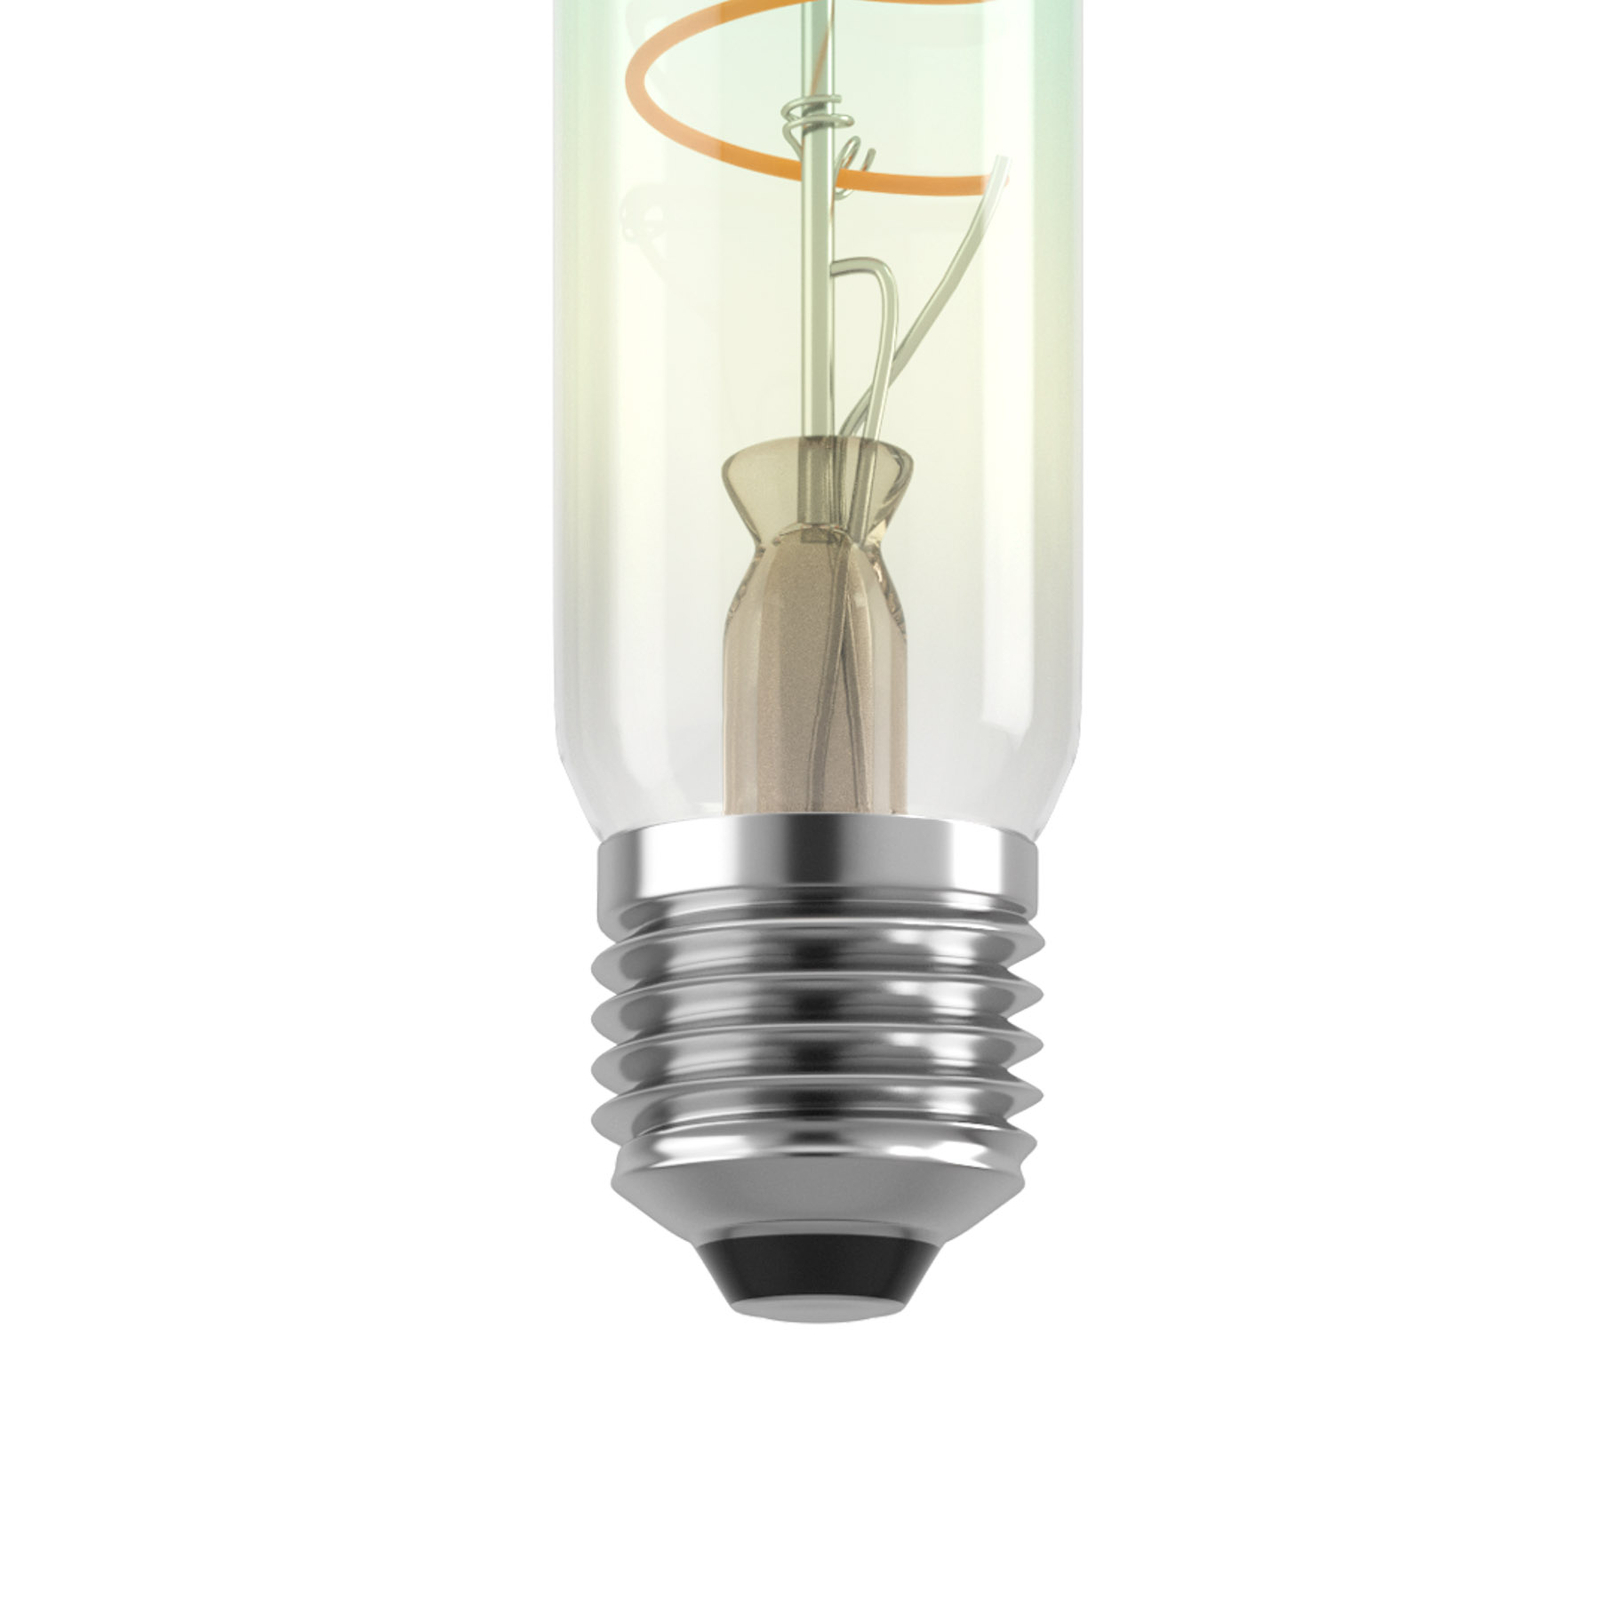 LED lamp E27 4W T30 2000K gloeidraad iriserende dimbaar